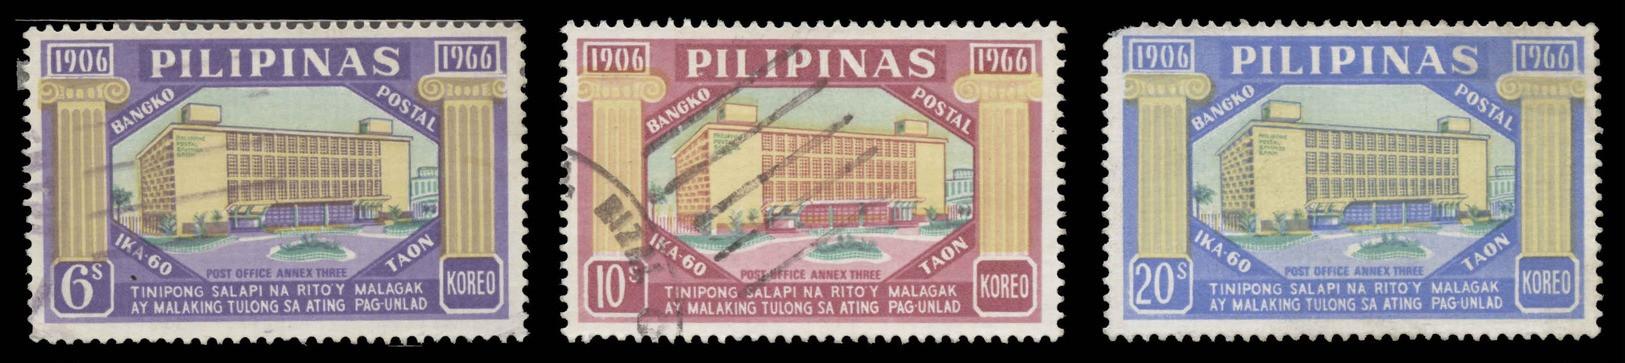 Philippines Scott # 957-959, Set Of 3 (1966) Post Office Annex Three, Used - Philippines